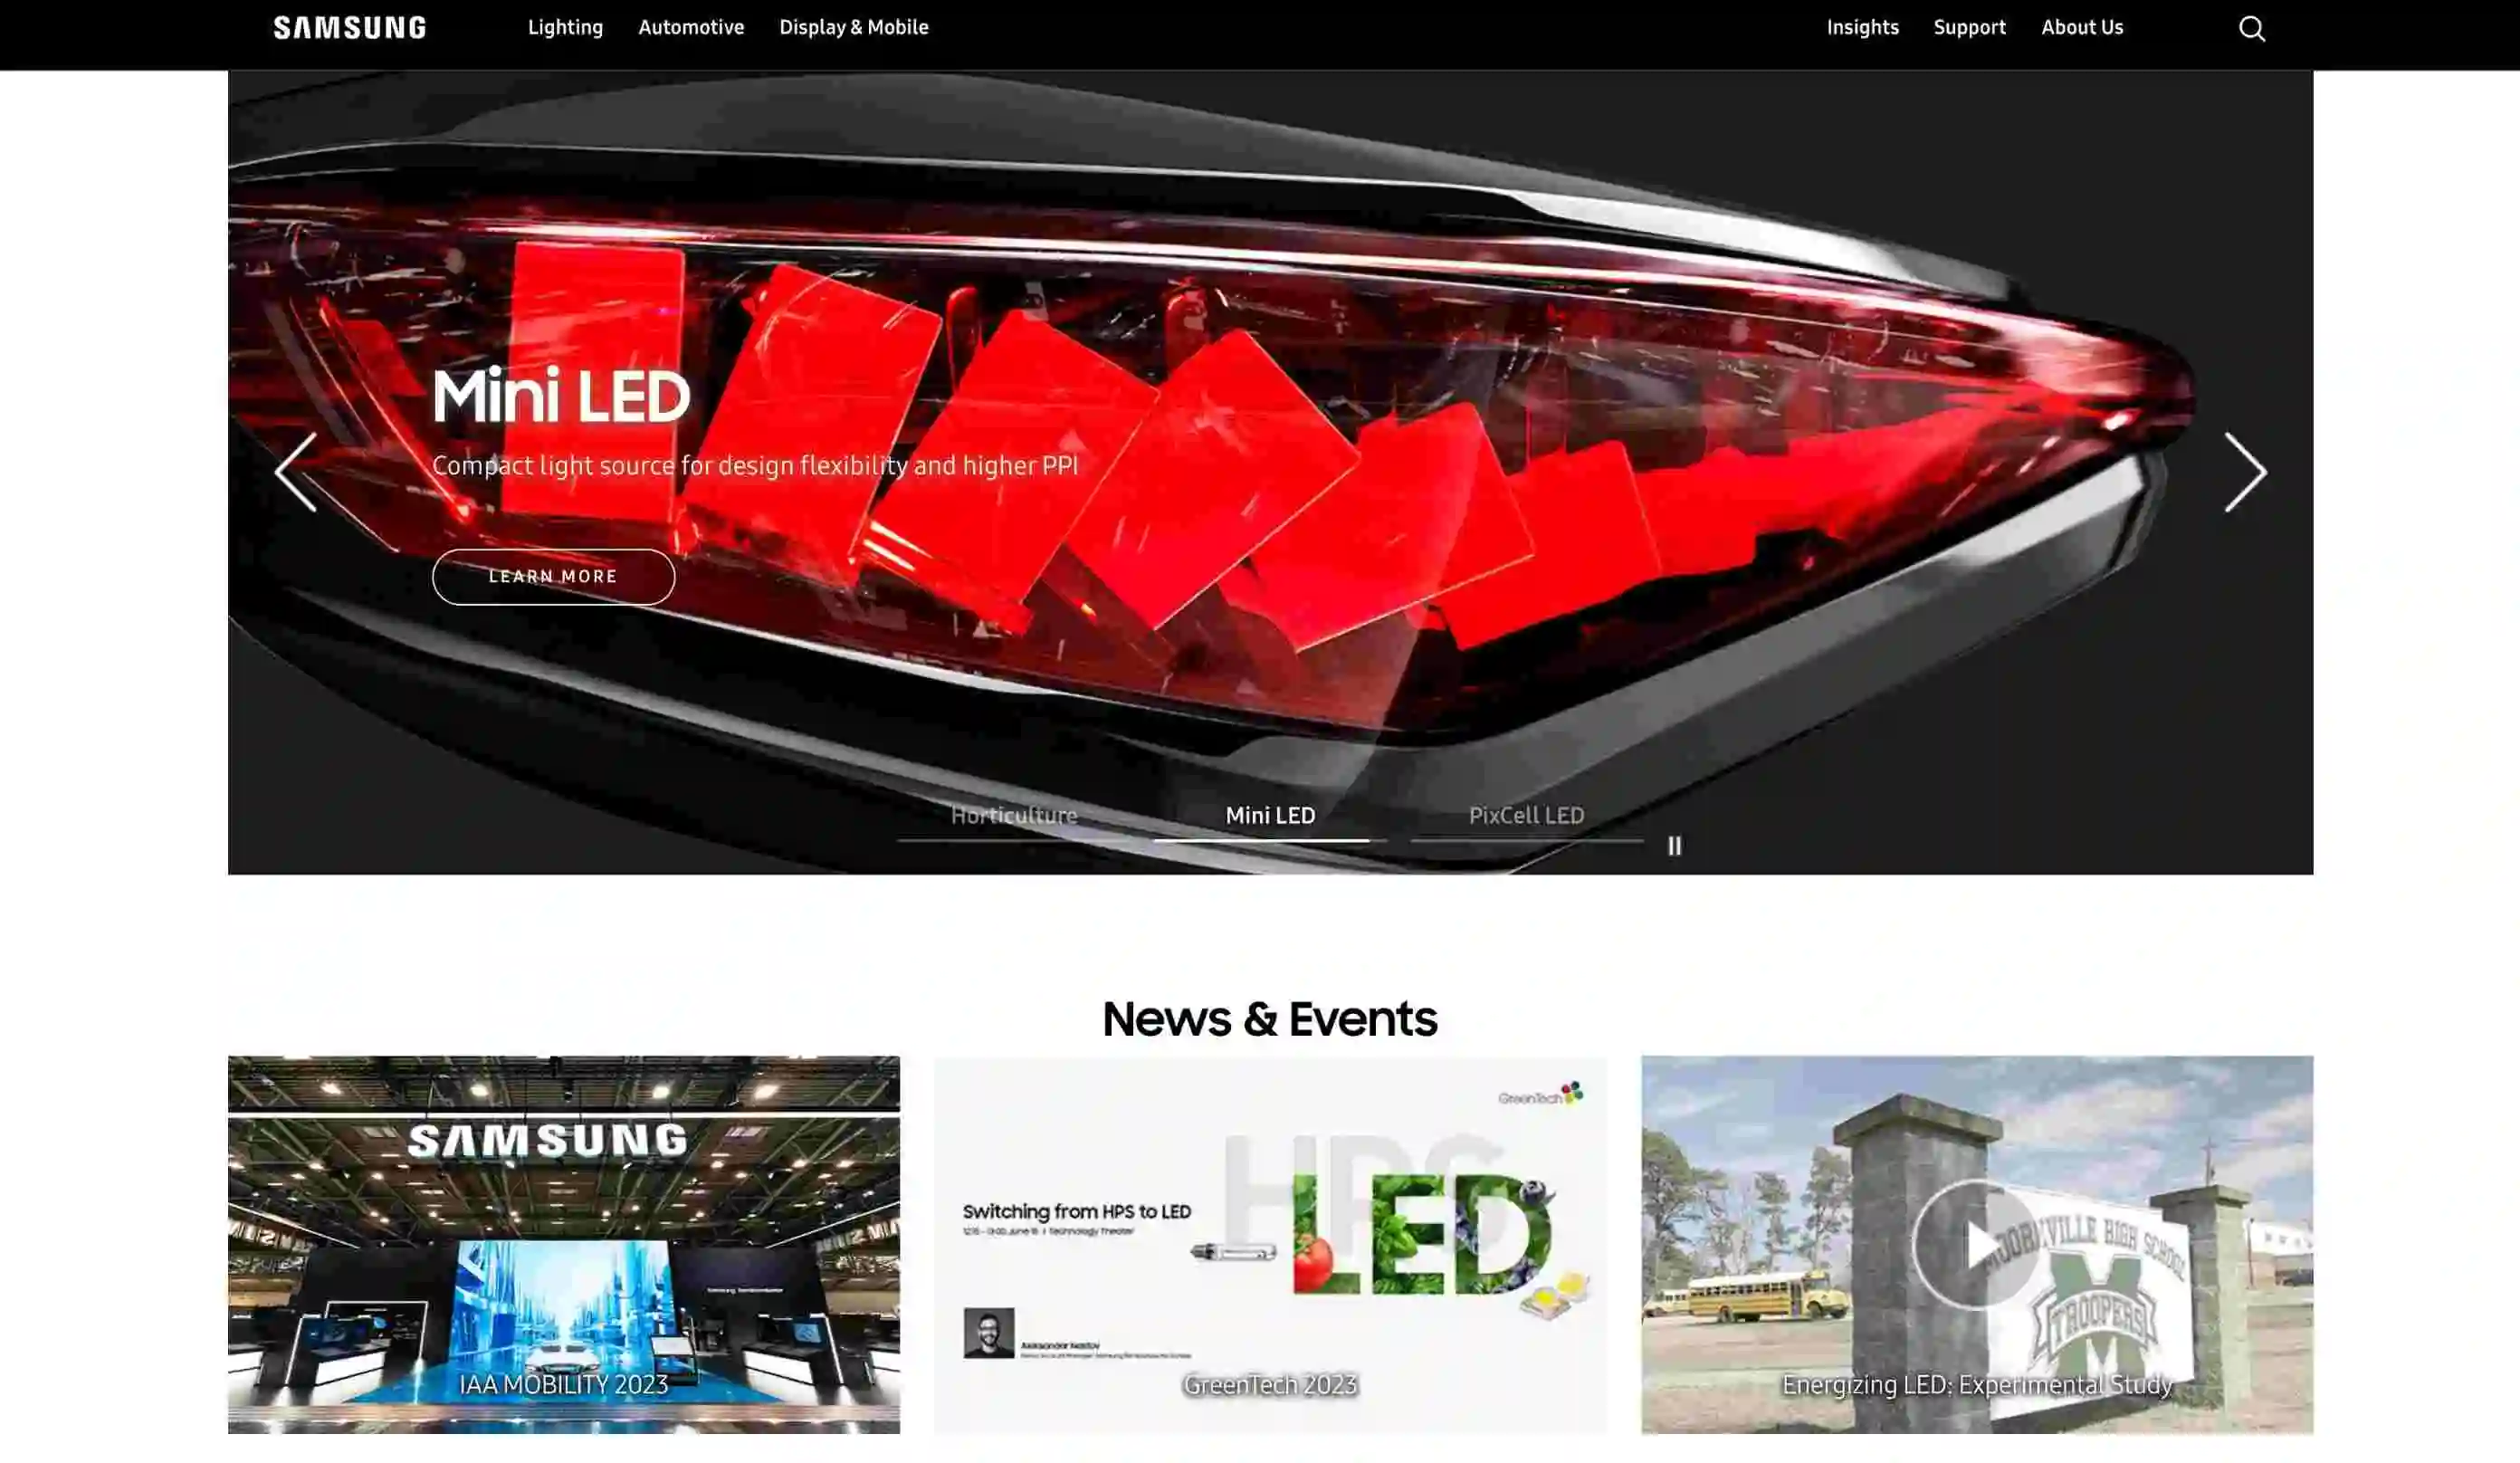 Samsung LED website homepage highlighting their innovative LED lighting solutions